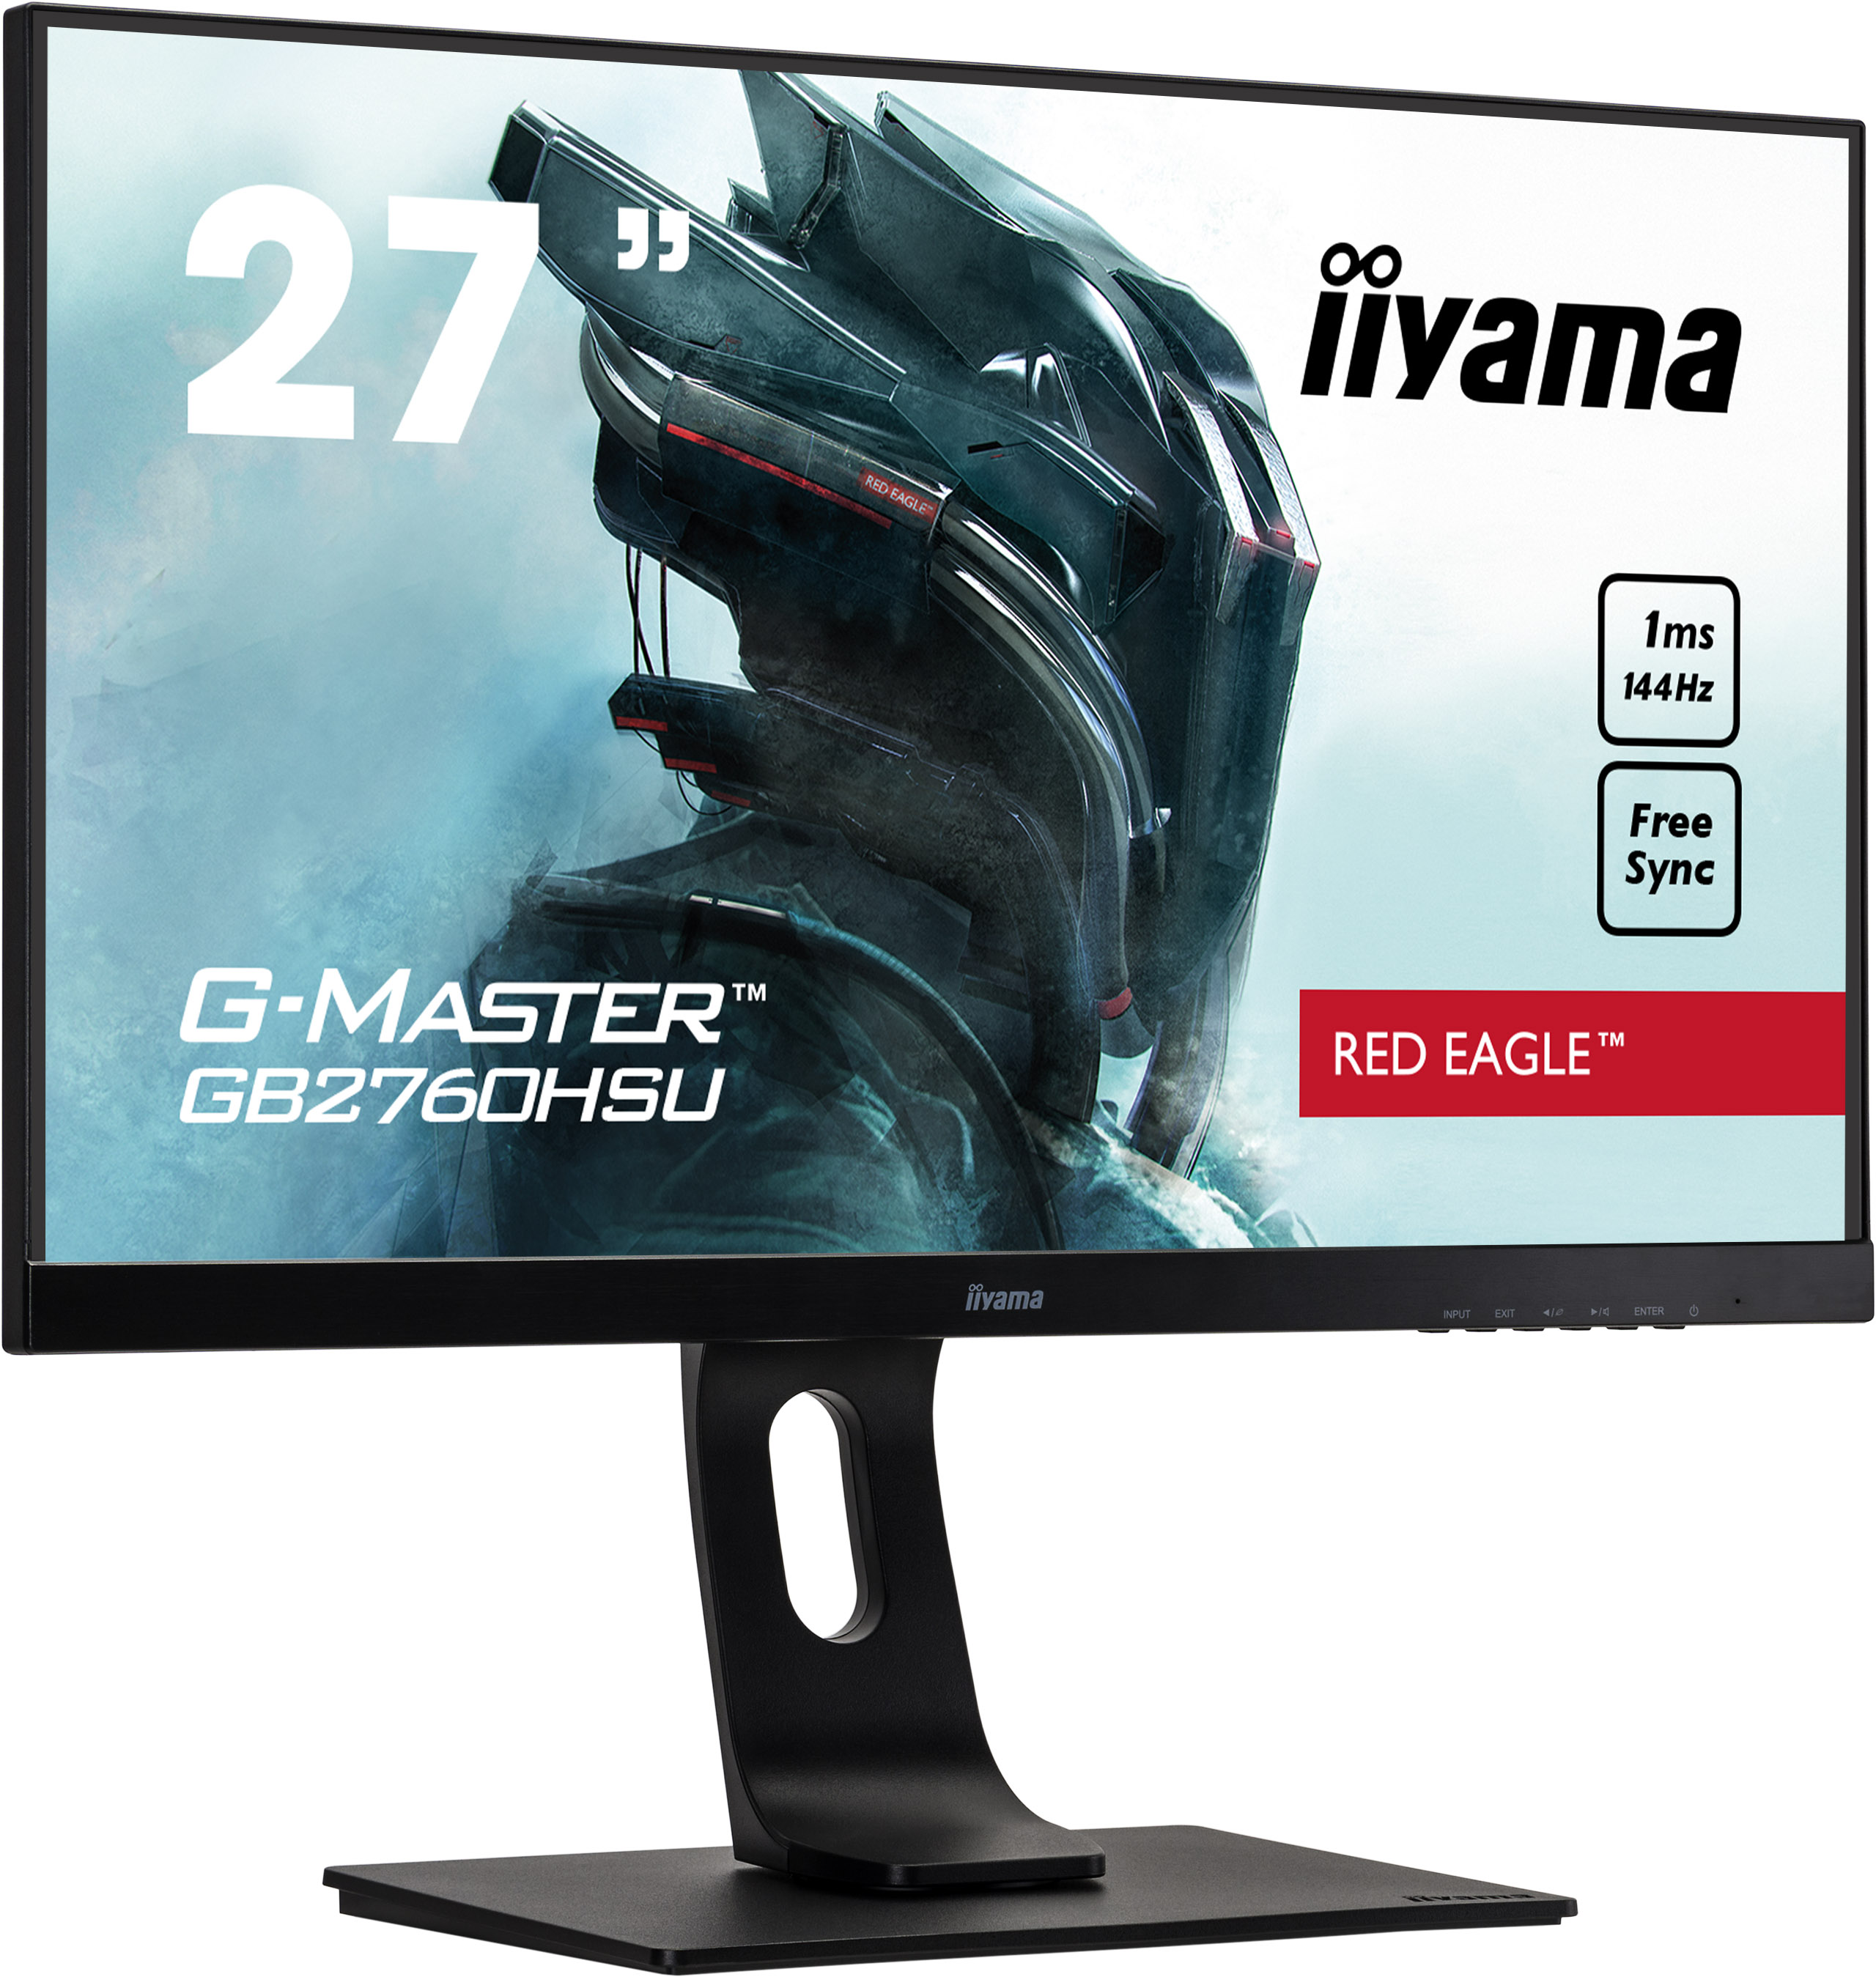 Iiyama G-MASTER GB2760HSU-B1 RED EAGLE | 27" | 144Hz | Gaming Monitor